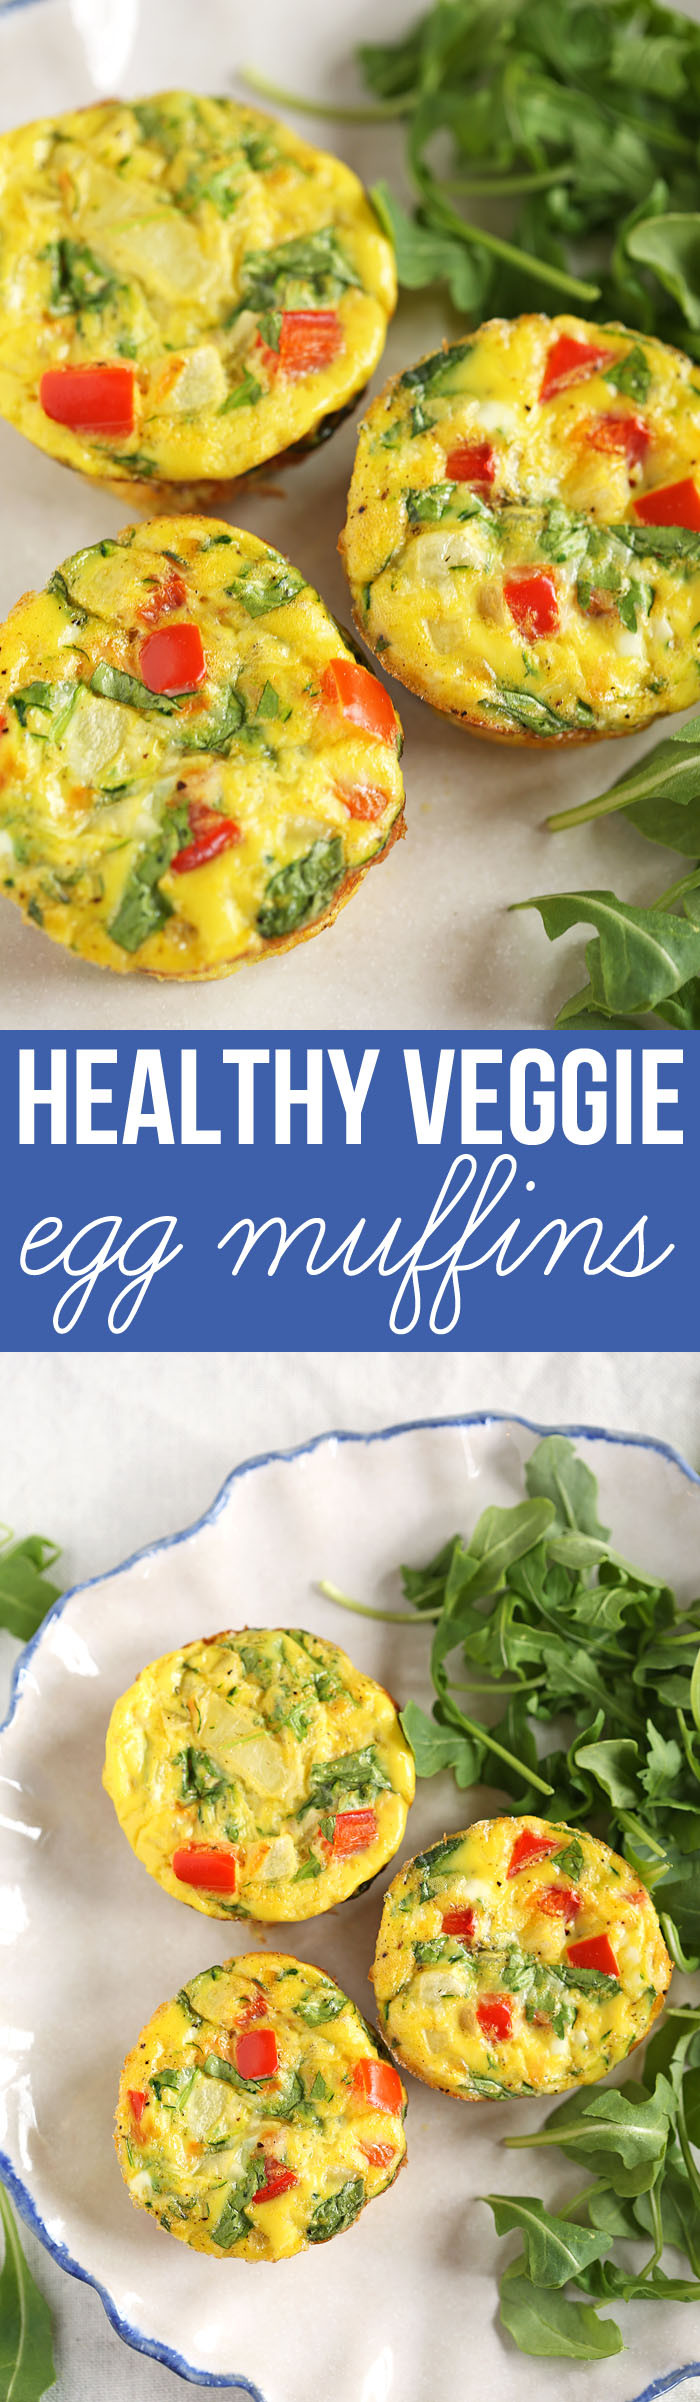 Healthy Breakfast Egg Muffins
 Healthy Veggie Egg Muffins Eat Yourself Skinny